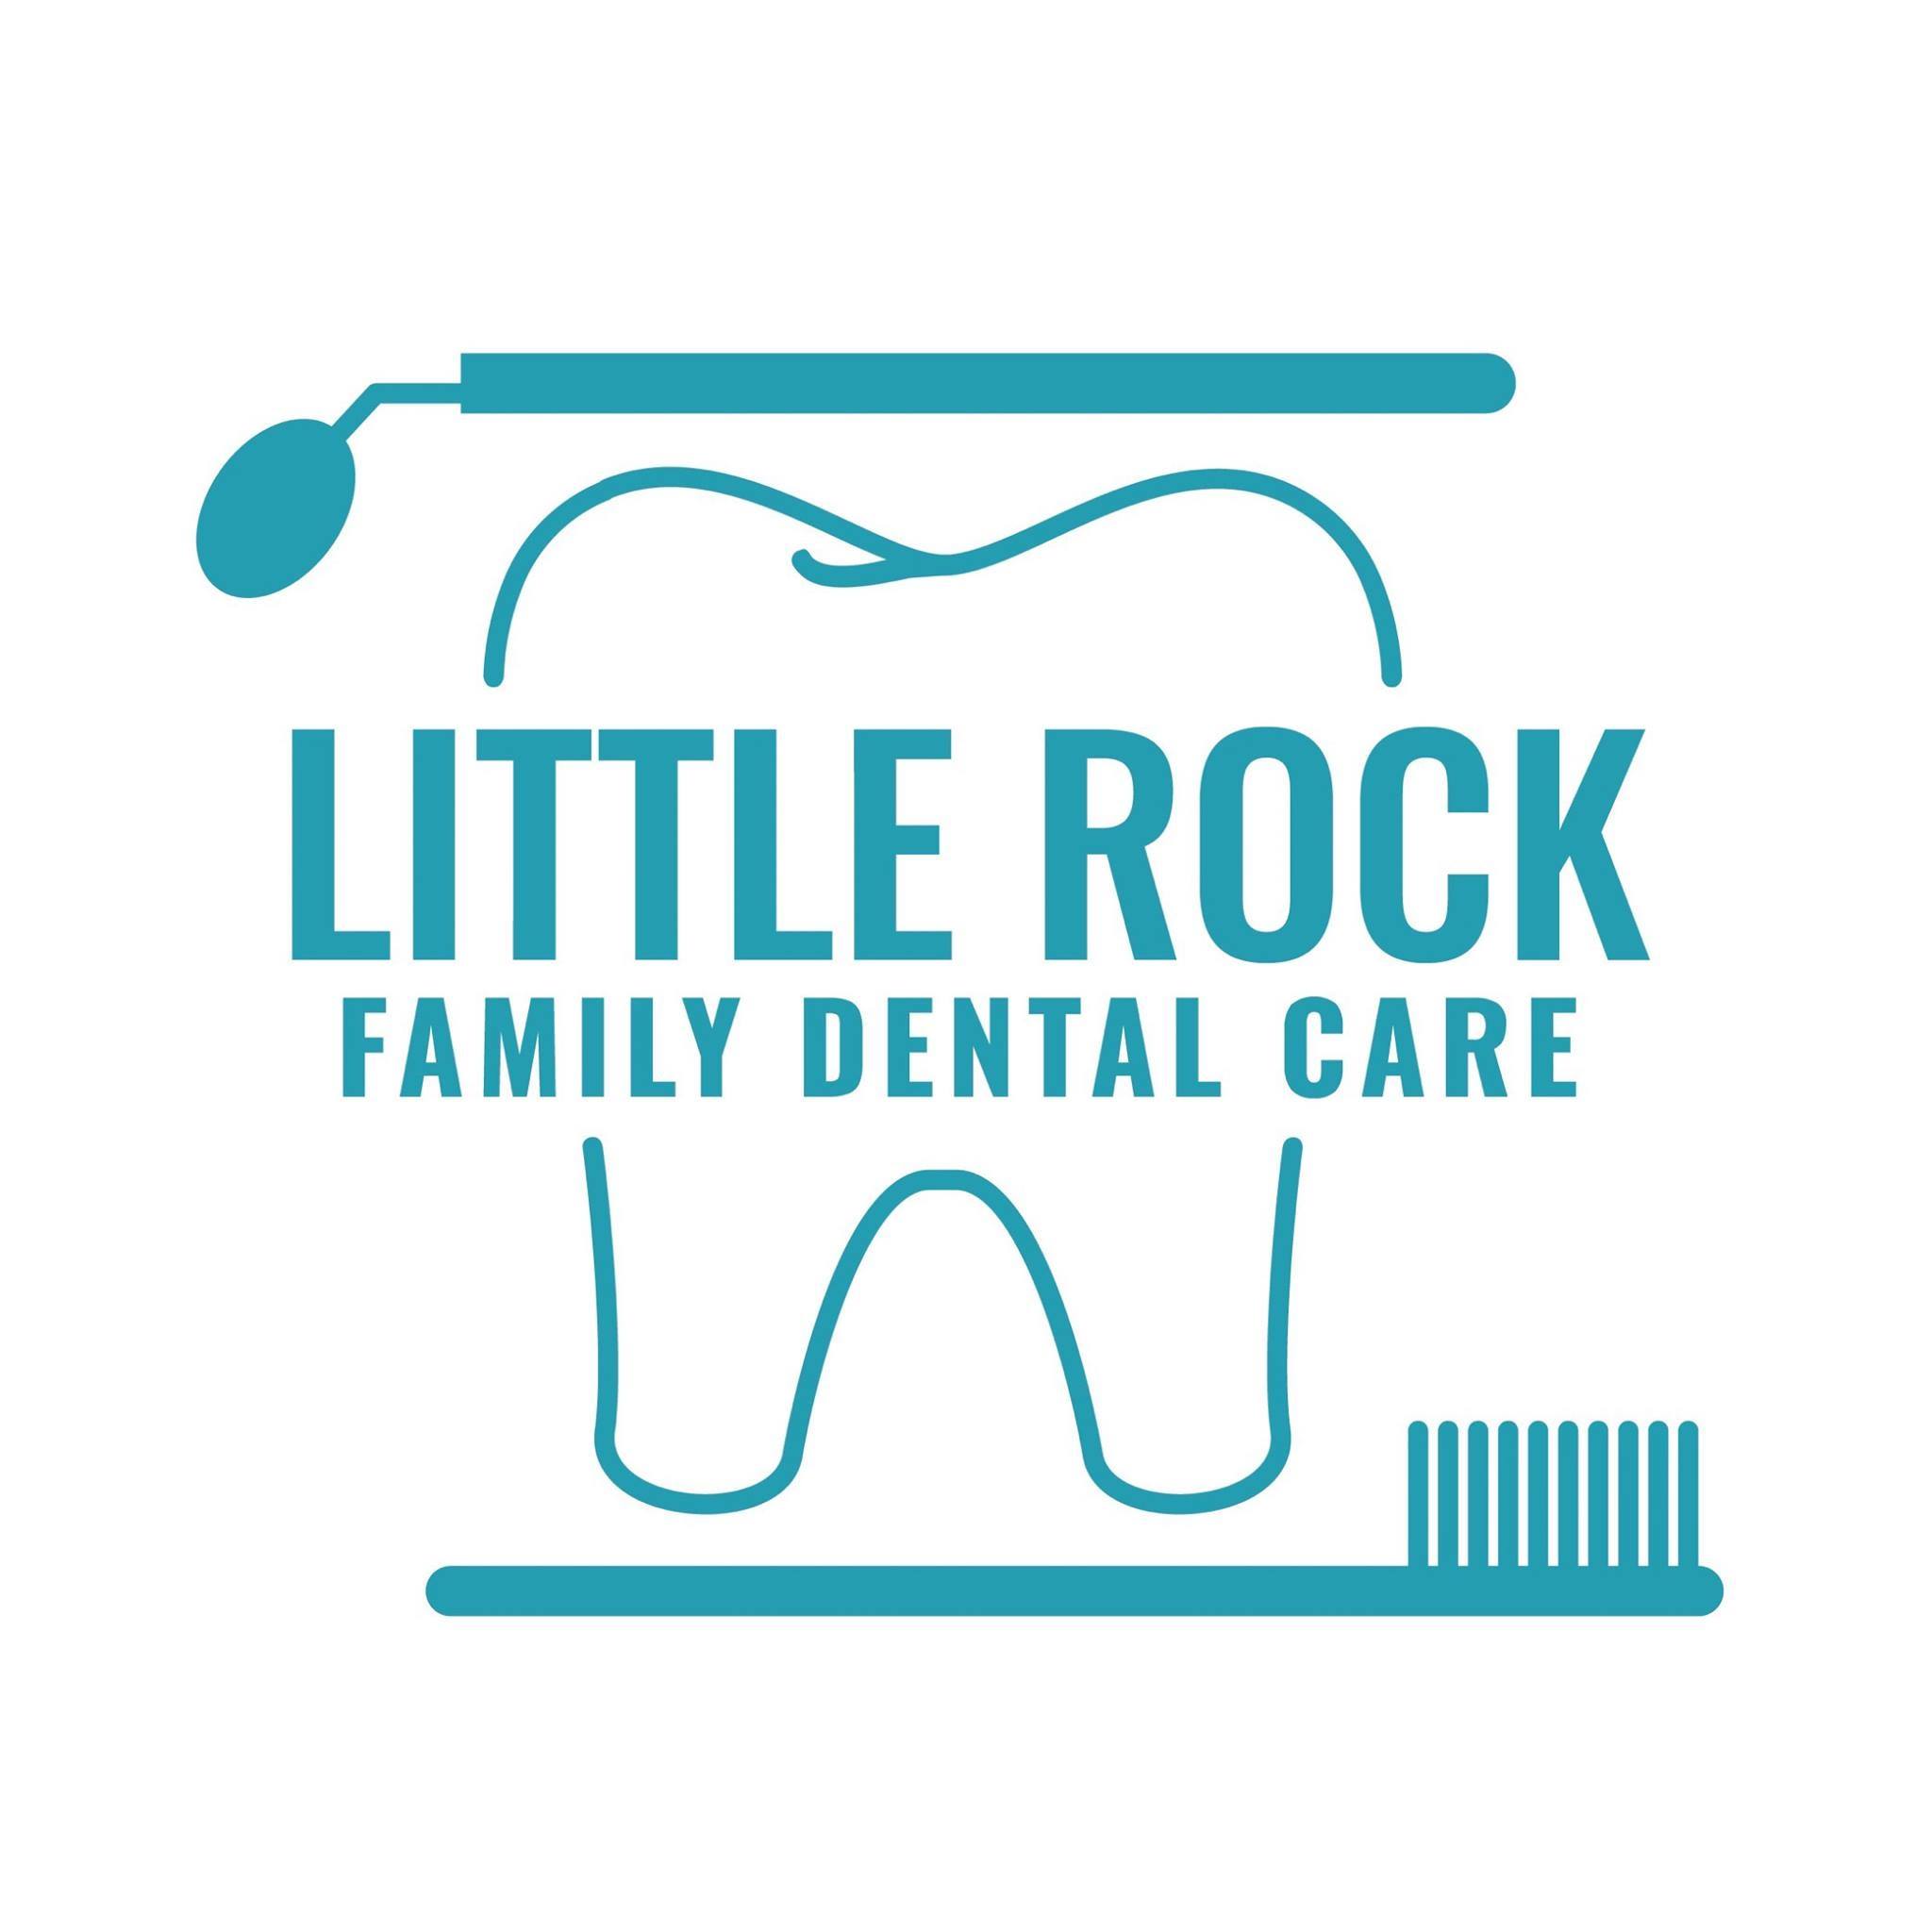 Company logo of Little Rock Family Dental Care